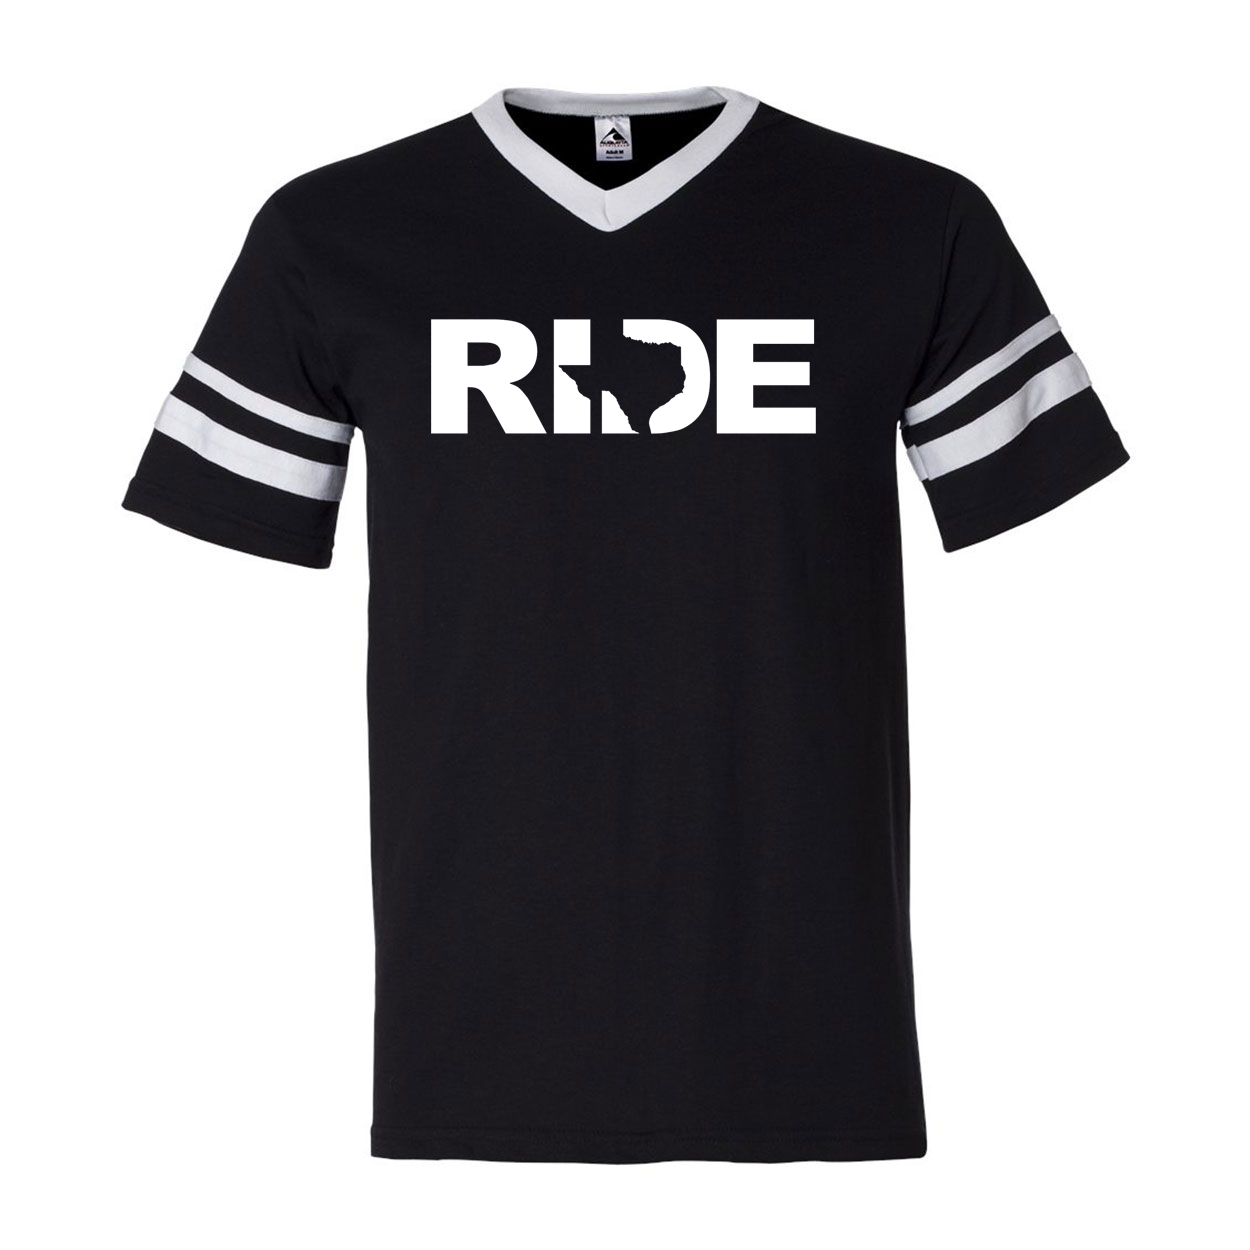 Ride Texas Classic Premium Striped Jersey T-Shirt Black/White (White Logo)